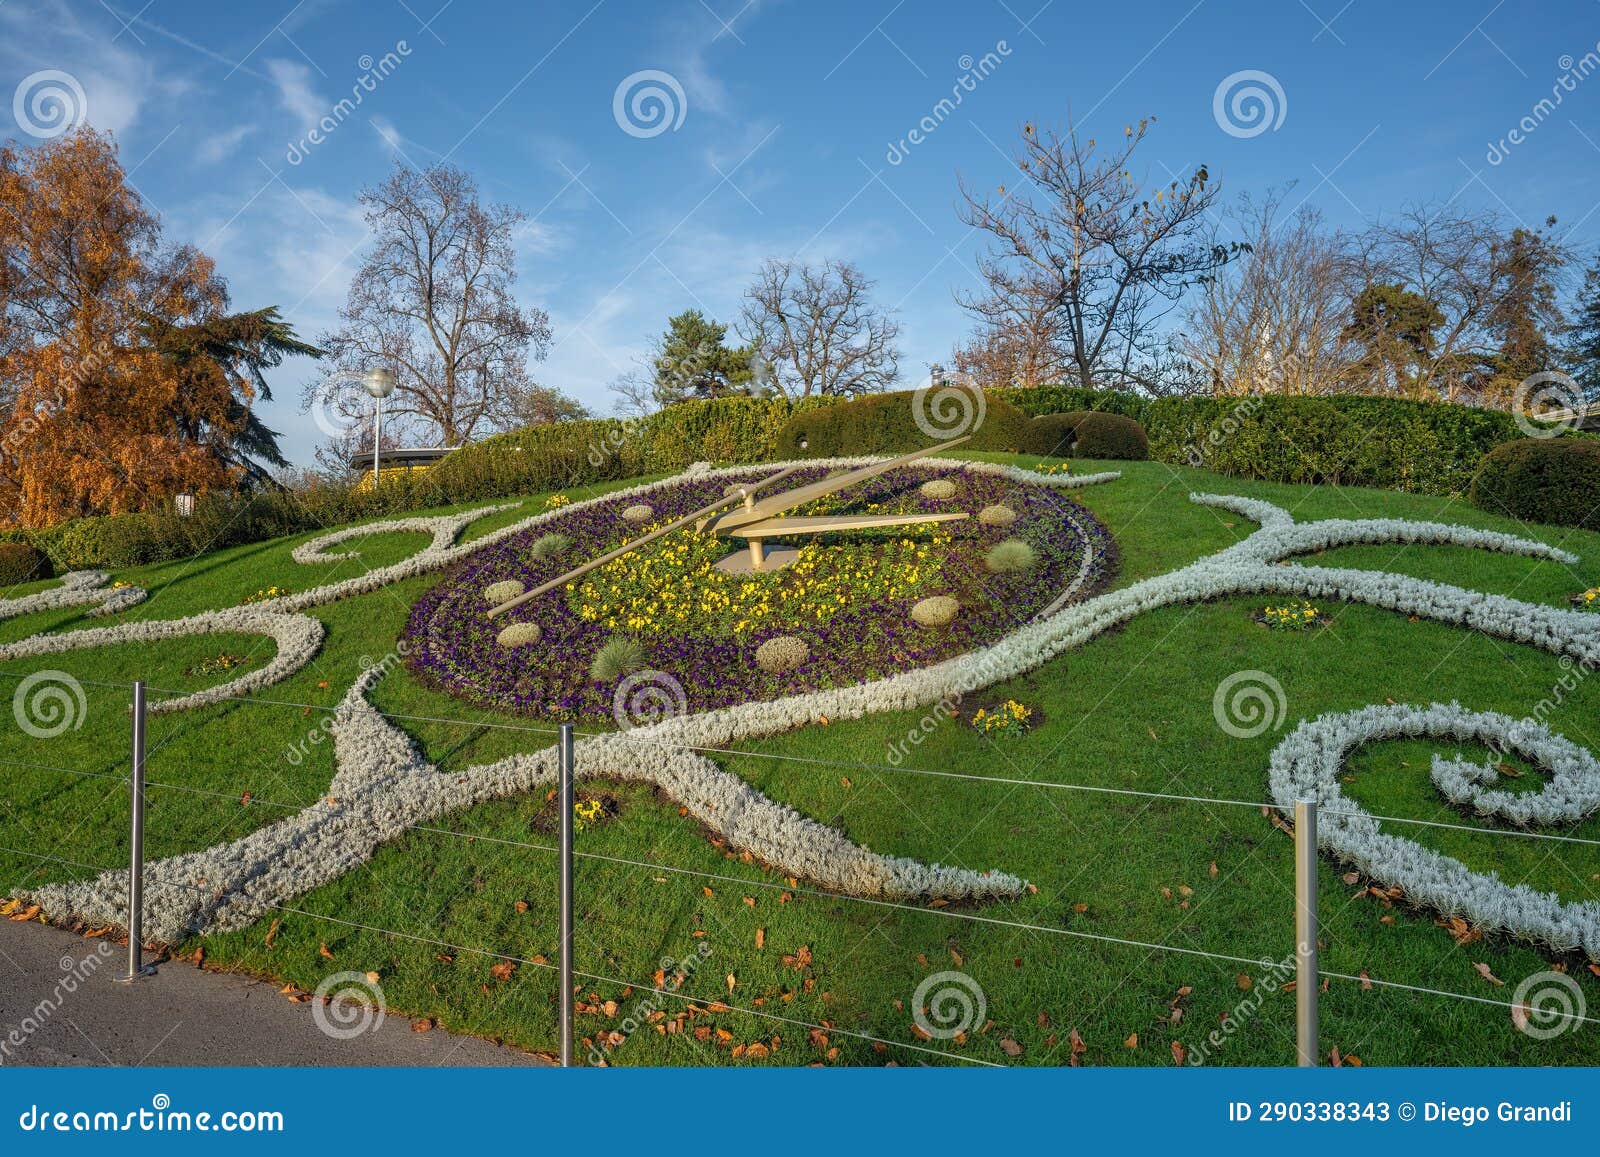 flower clock at jardin anglais (english garden) park - geneva, switzerland